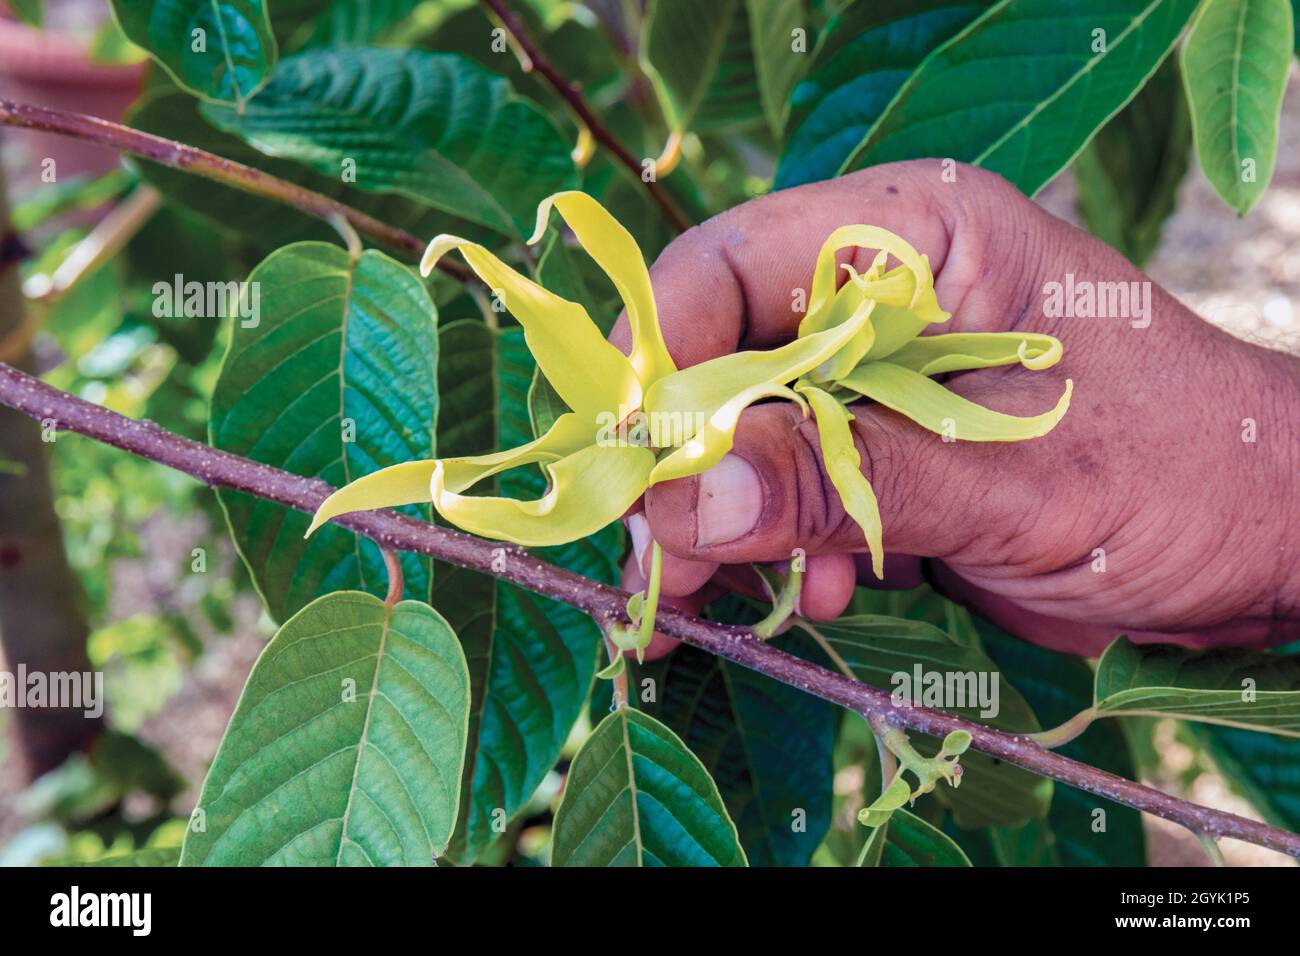 Ylang Ylang Blume, Cananga odorata, auch bekannt als Cananga Baum, Mauritius, Mascarene Inseln. Parfüm wird aus den Blüten des Baumes und ich extrahiert Stockfoto